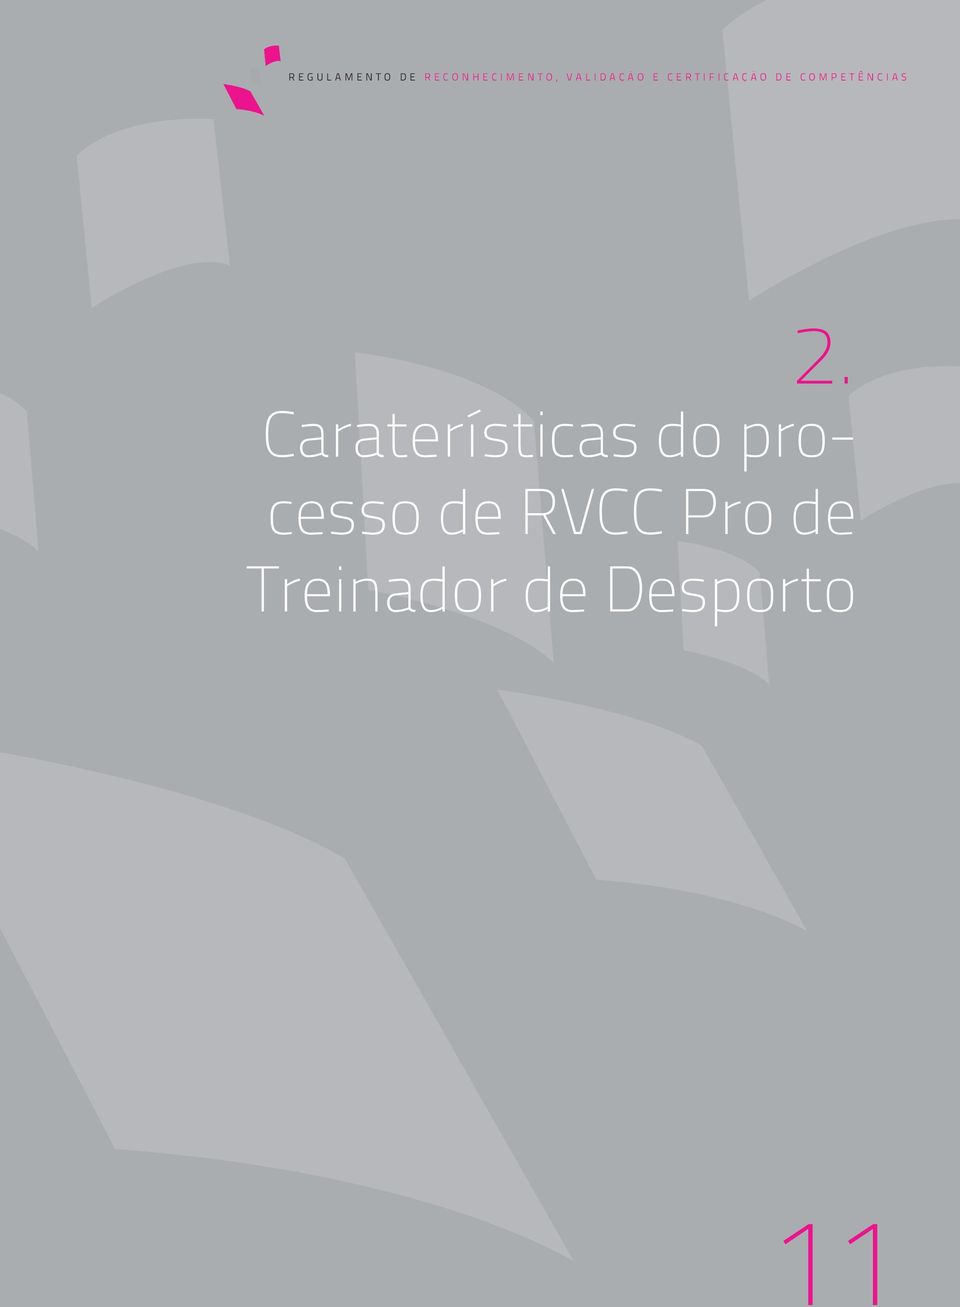 RVCC Pro de